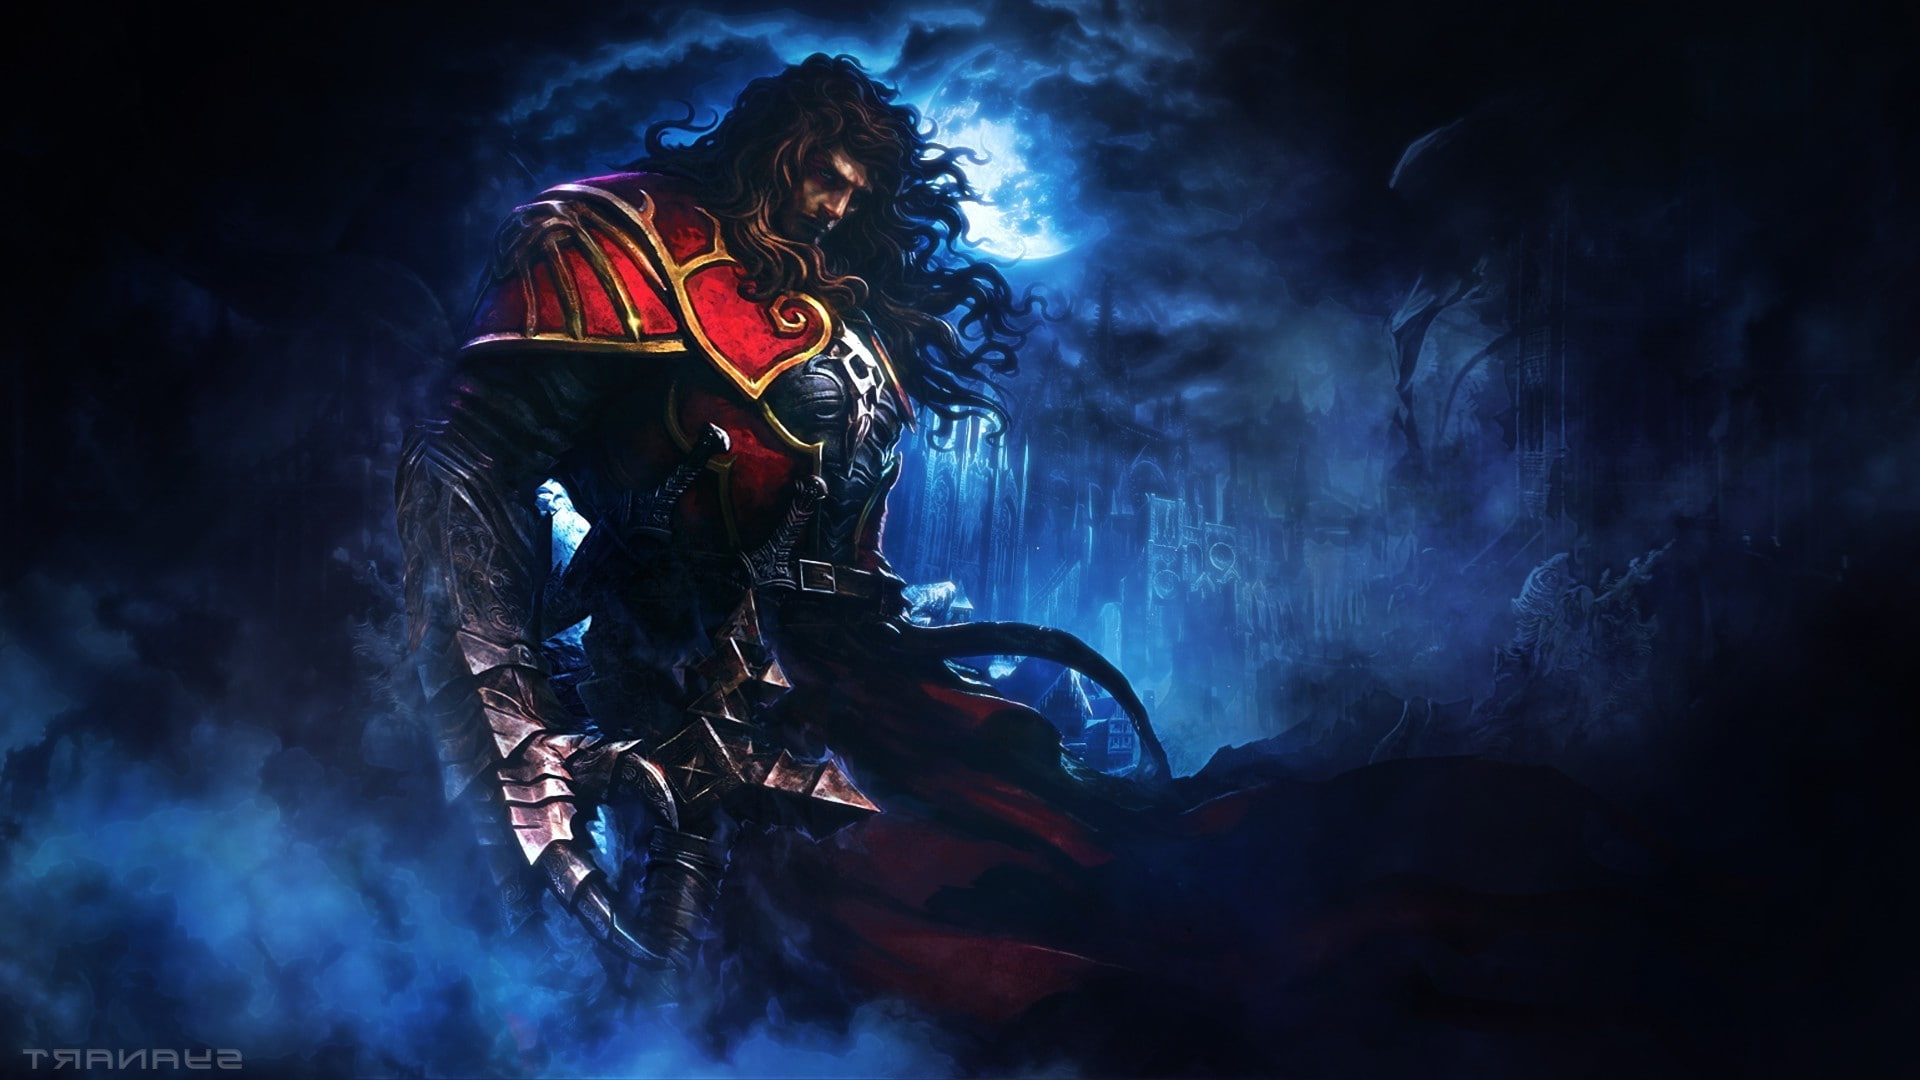 castlevania castlevania lords of shadow video games fantasy art gabriel belmont night smoke armor